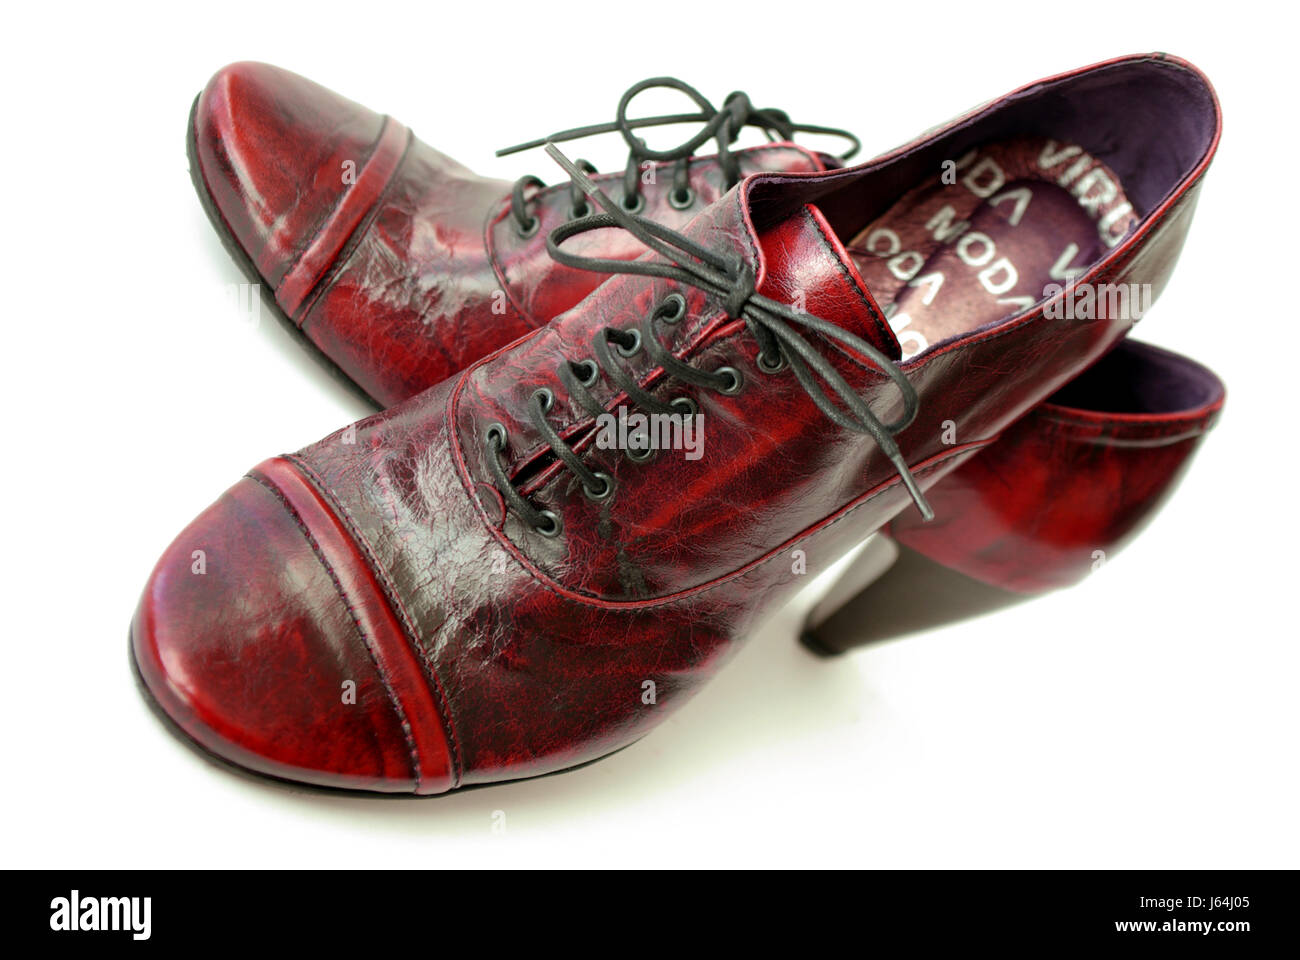 shoes heel article of fashion fashion colour fashionable leather shoelace pumps Stock Photo